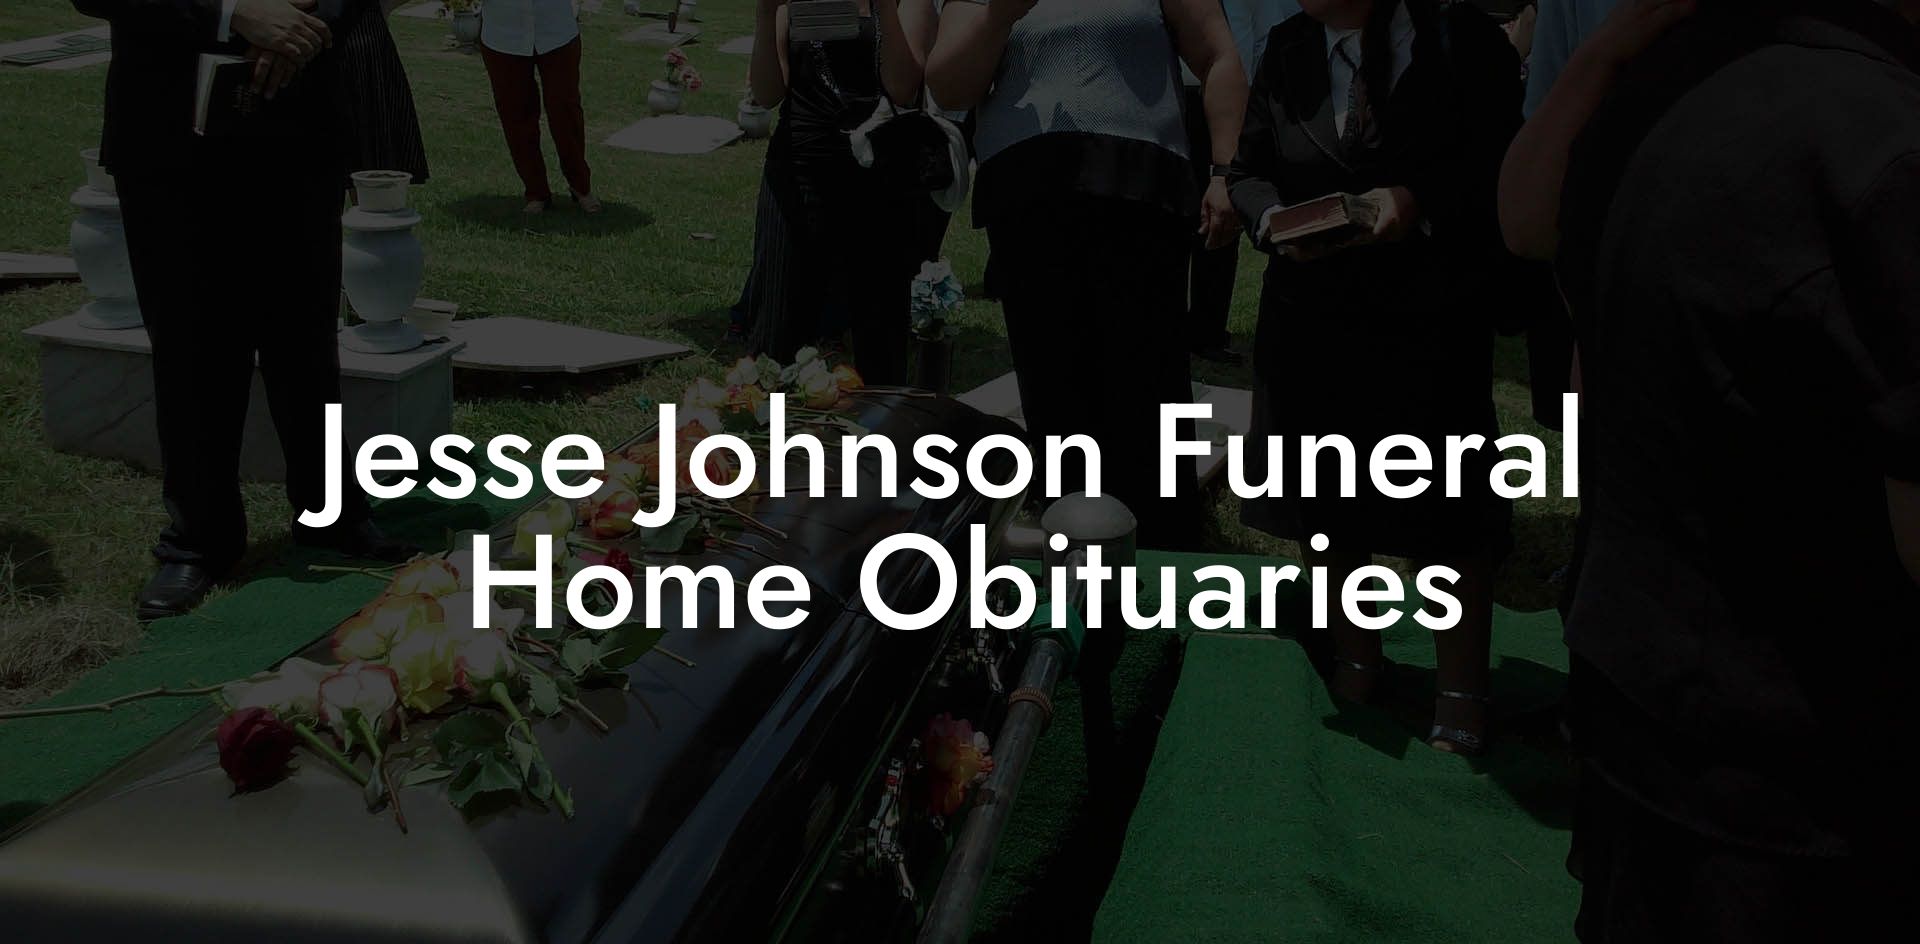 Jesse Johnson Funeral Home Obituaries